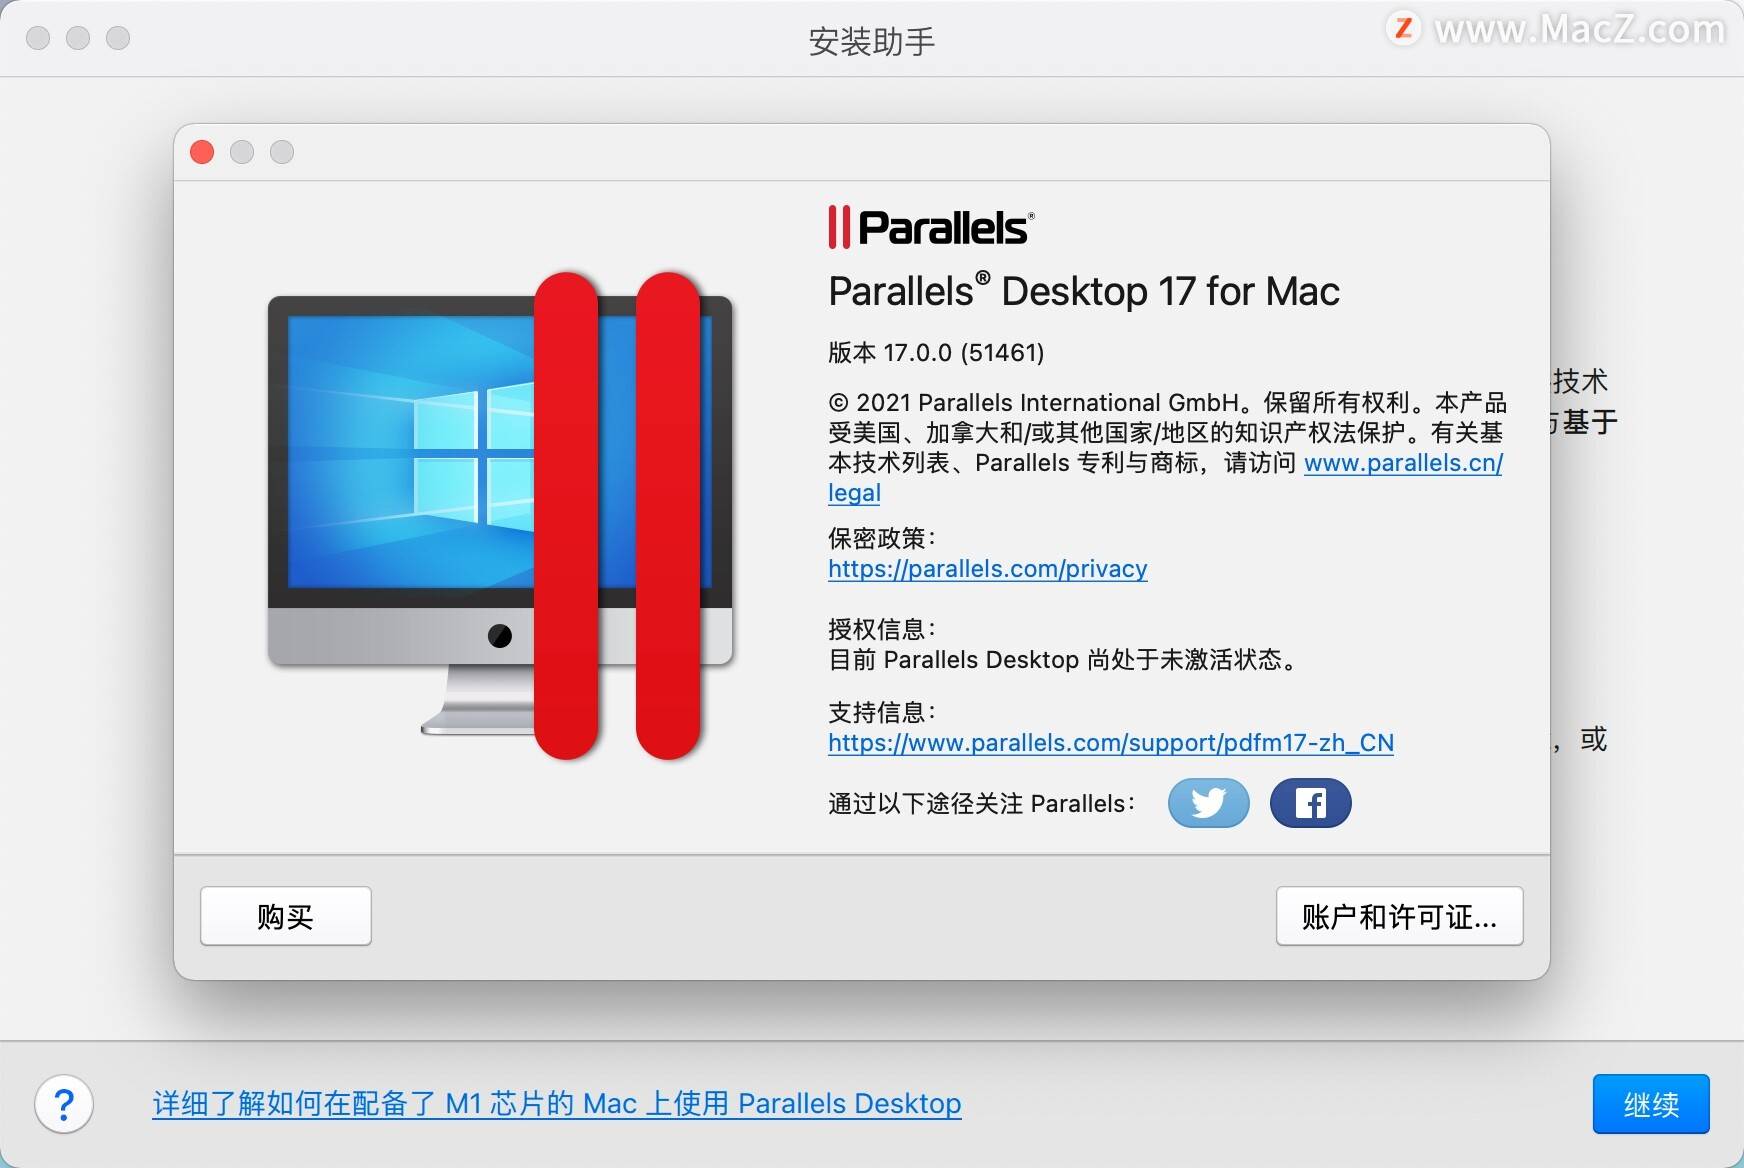 parallels desktop 17 for mac m1